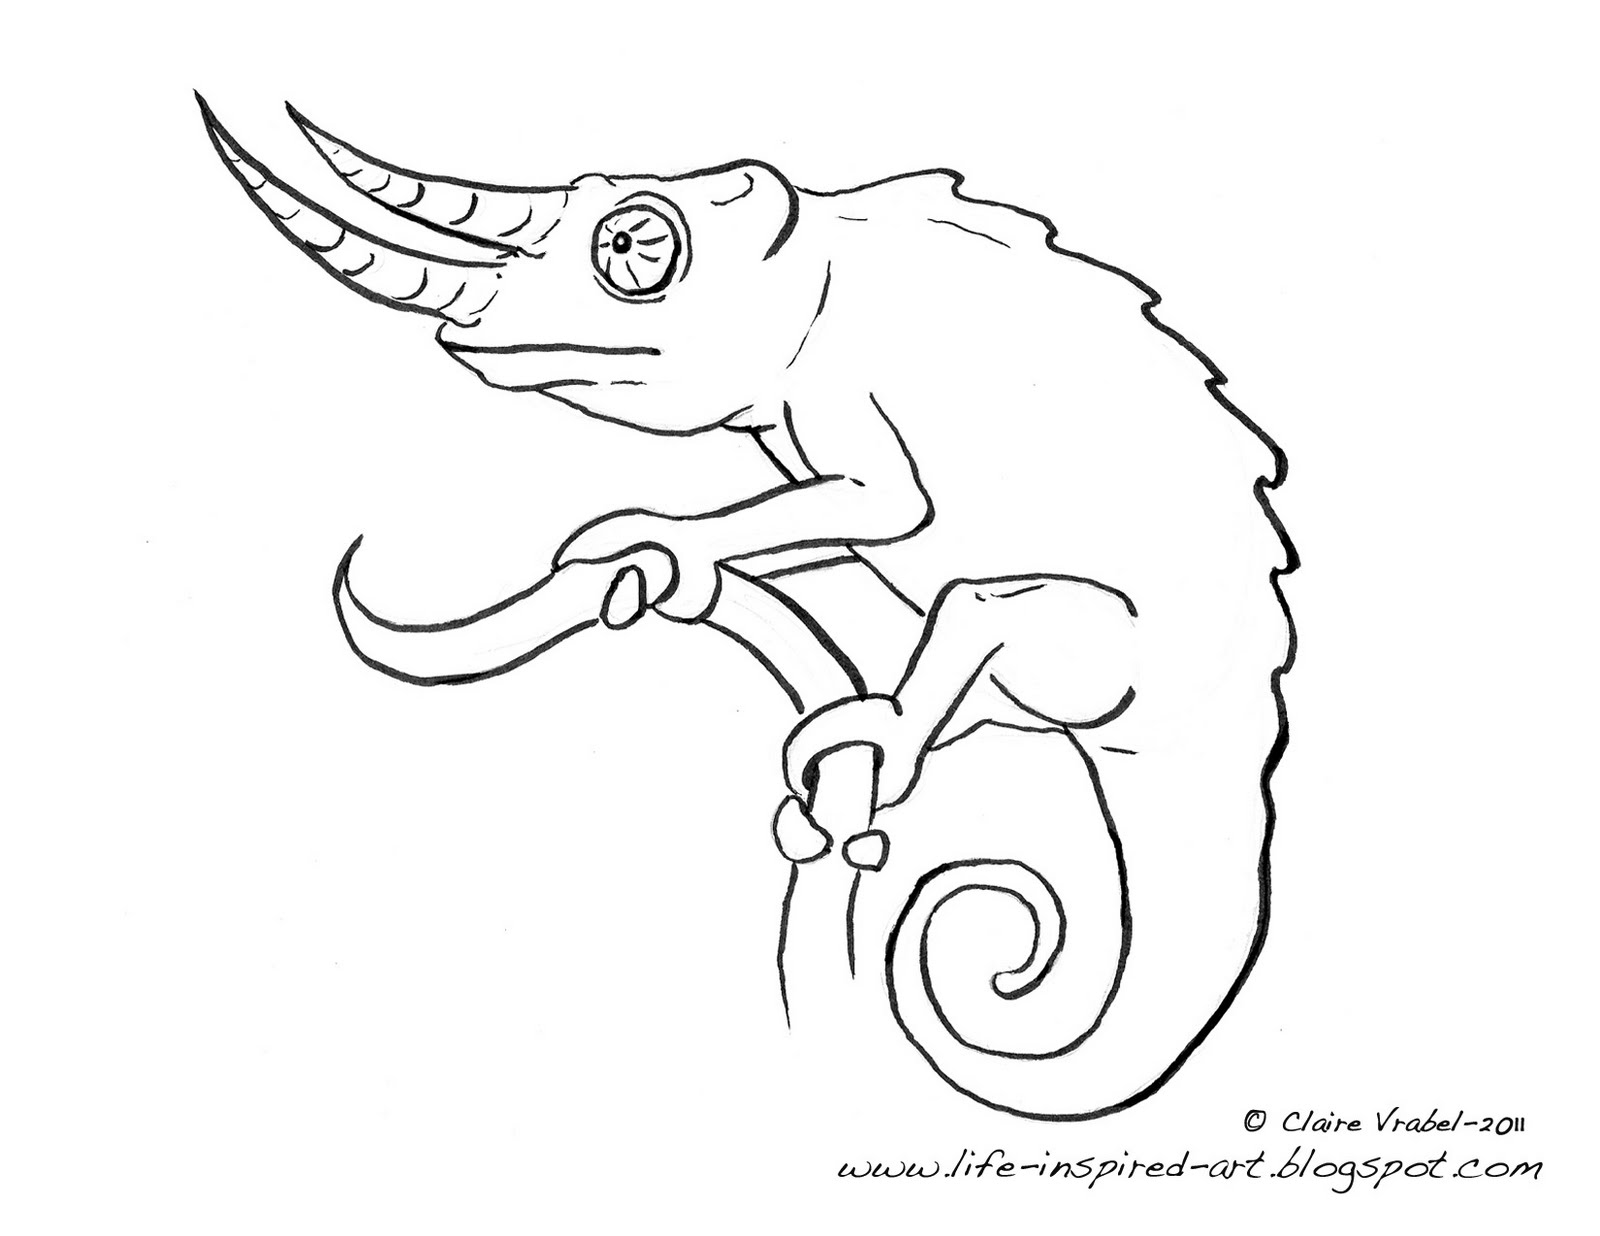 Chameleon drawing